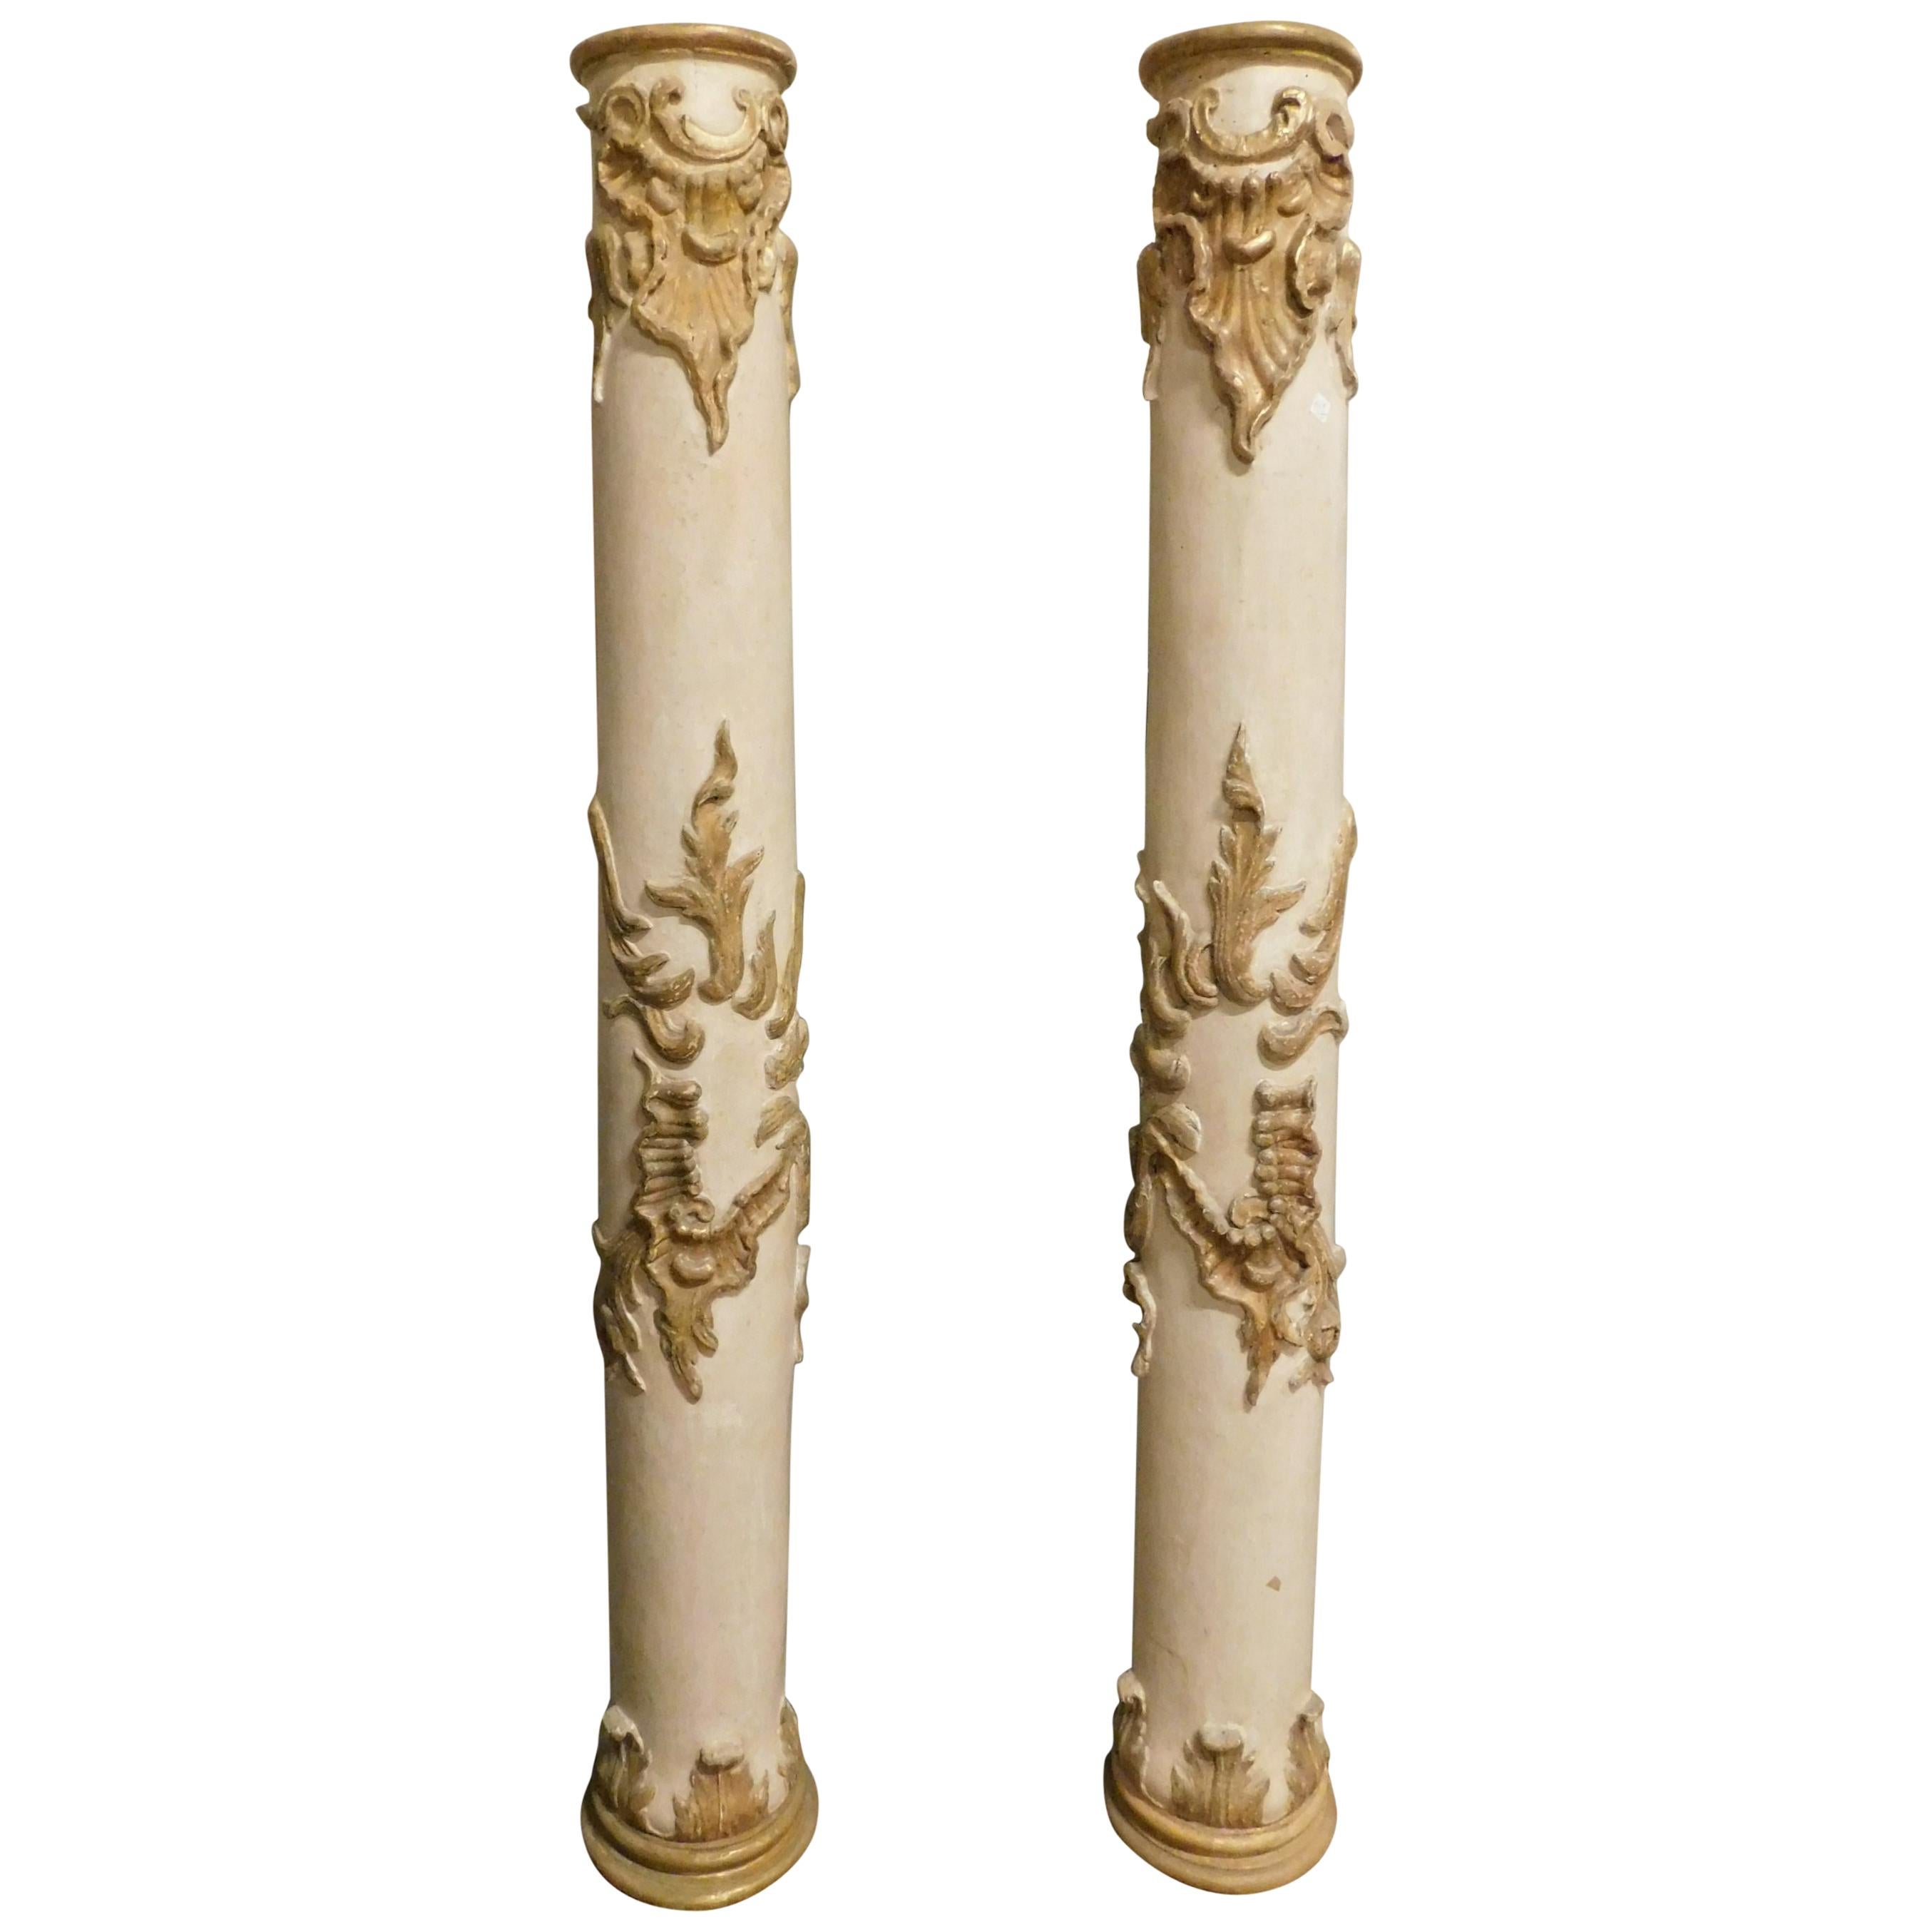 Antikes Paar hölzerner Säulen aus dem 18. Jahrhundert, lackiert mit vergoldeten Skulpturen